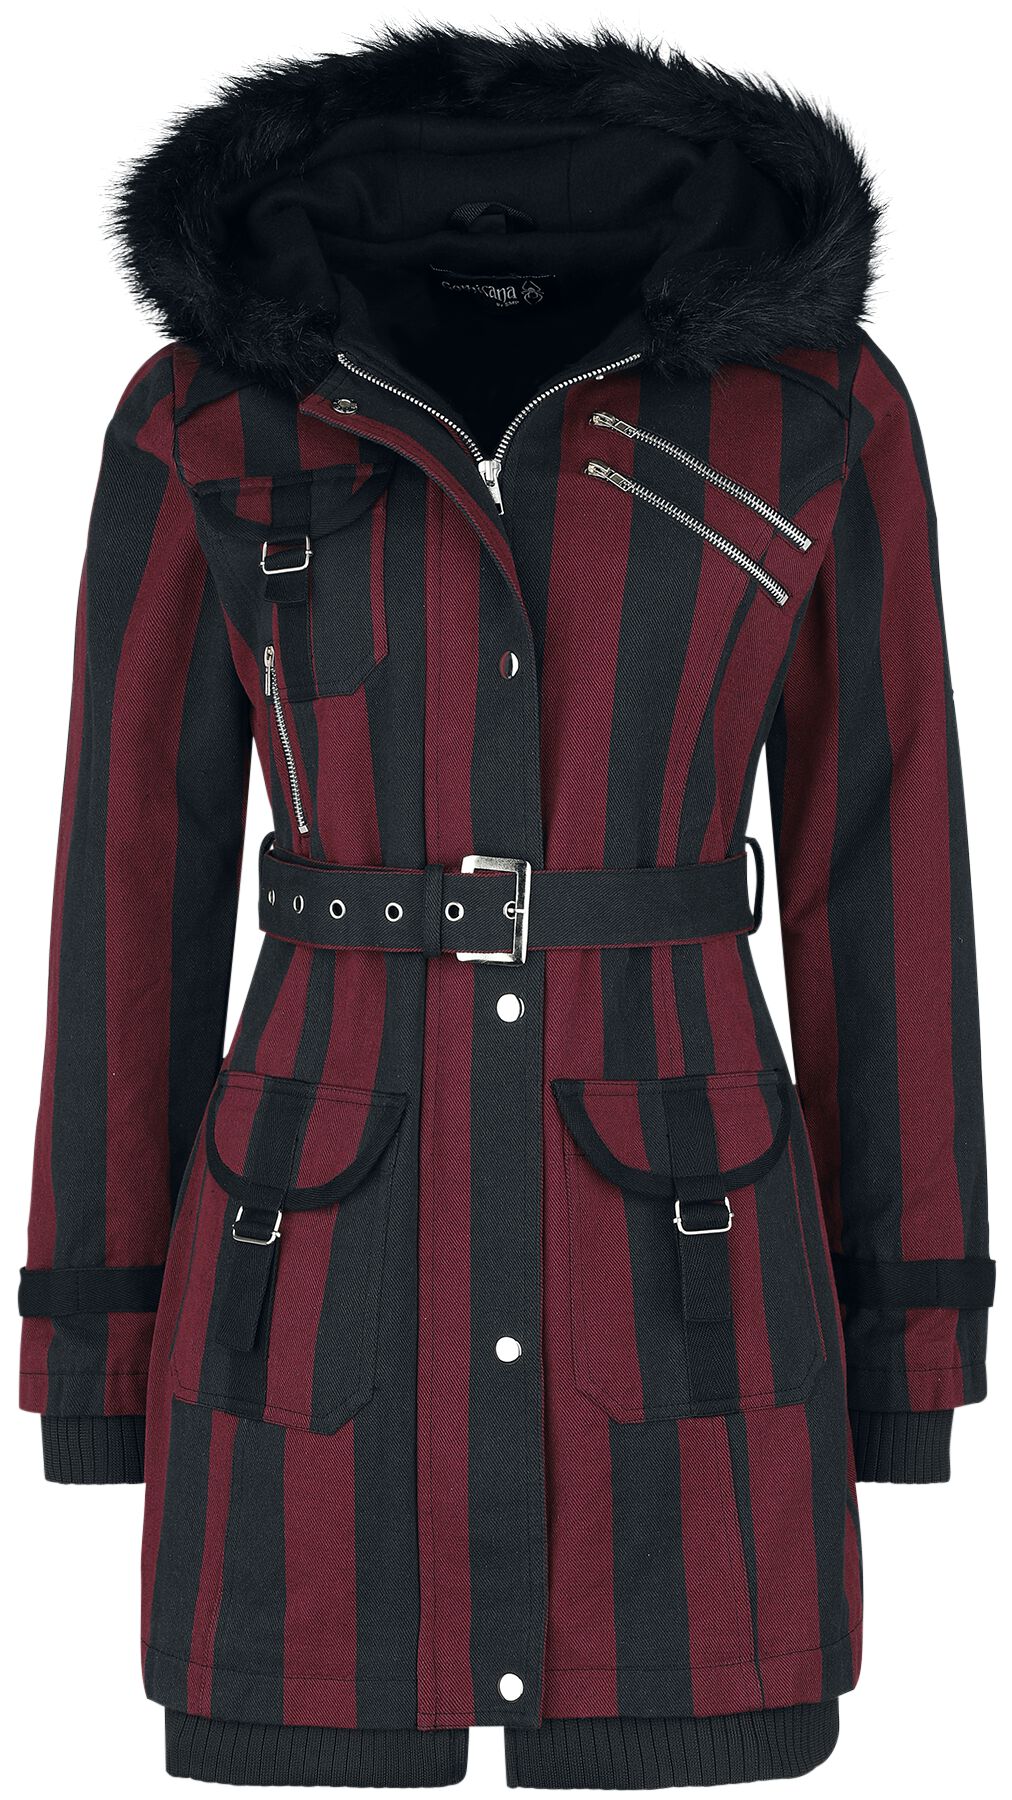 Gothicana by EMP Multi Pocket Jacket Winterjacke schwarz rot in XL von Gothicana by EMP